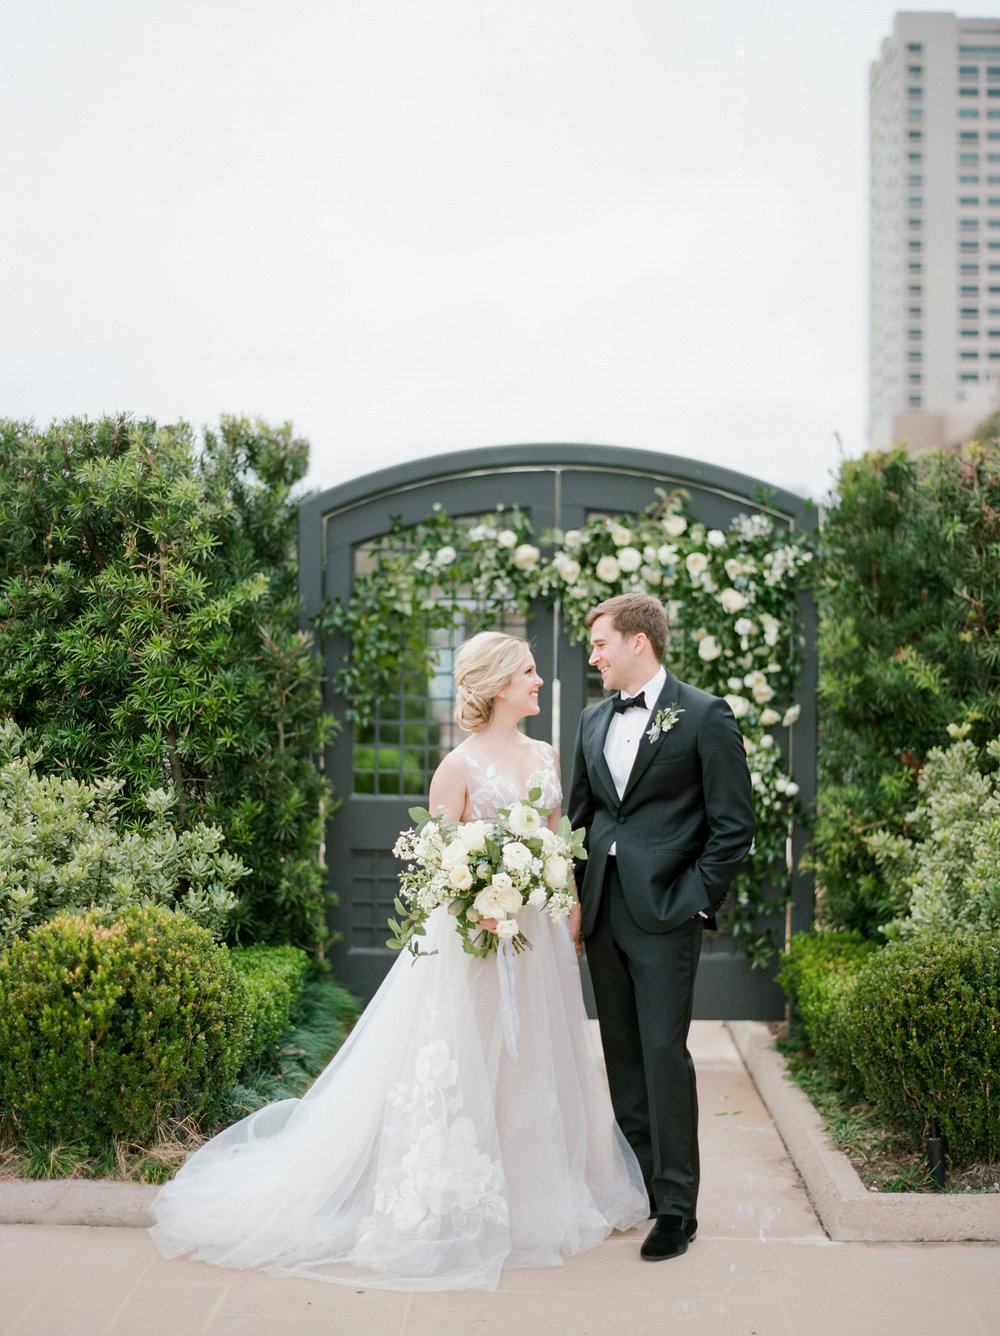 McGovern-Centennial-Gardens-Houston-Texas-Wedding-Venue-Josh-Dana-Fernandez-Photography-Film-Destination-Fine-Art-Luxury-Top-Best-Austin-Dallas-Magnolia-Rouge-Jennifer-Laura-Design-3.jpg